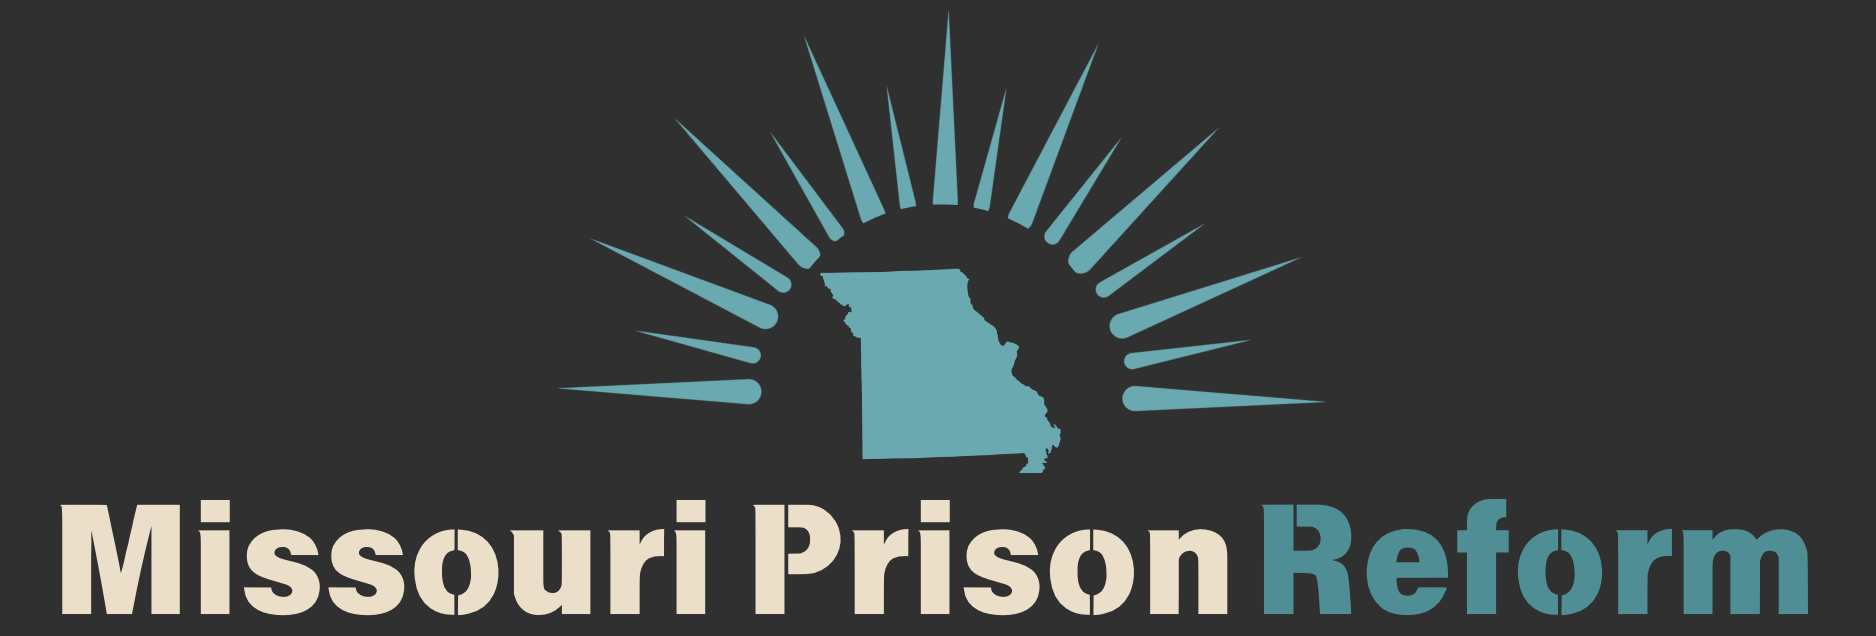 Missouri Prison Reform